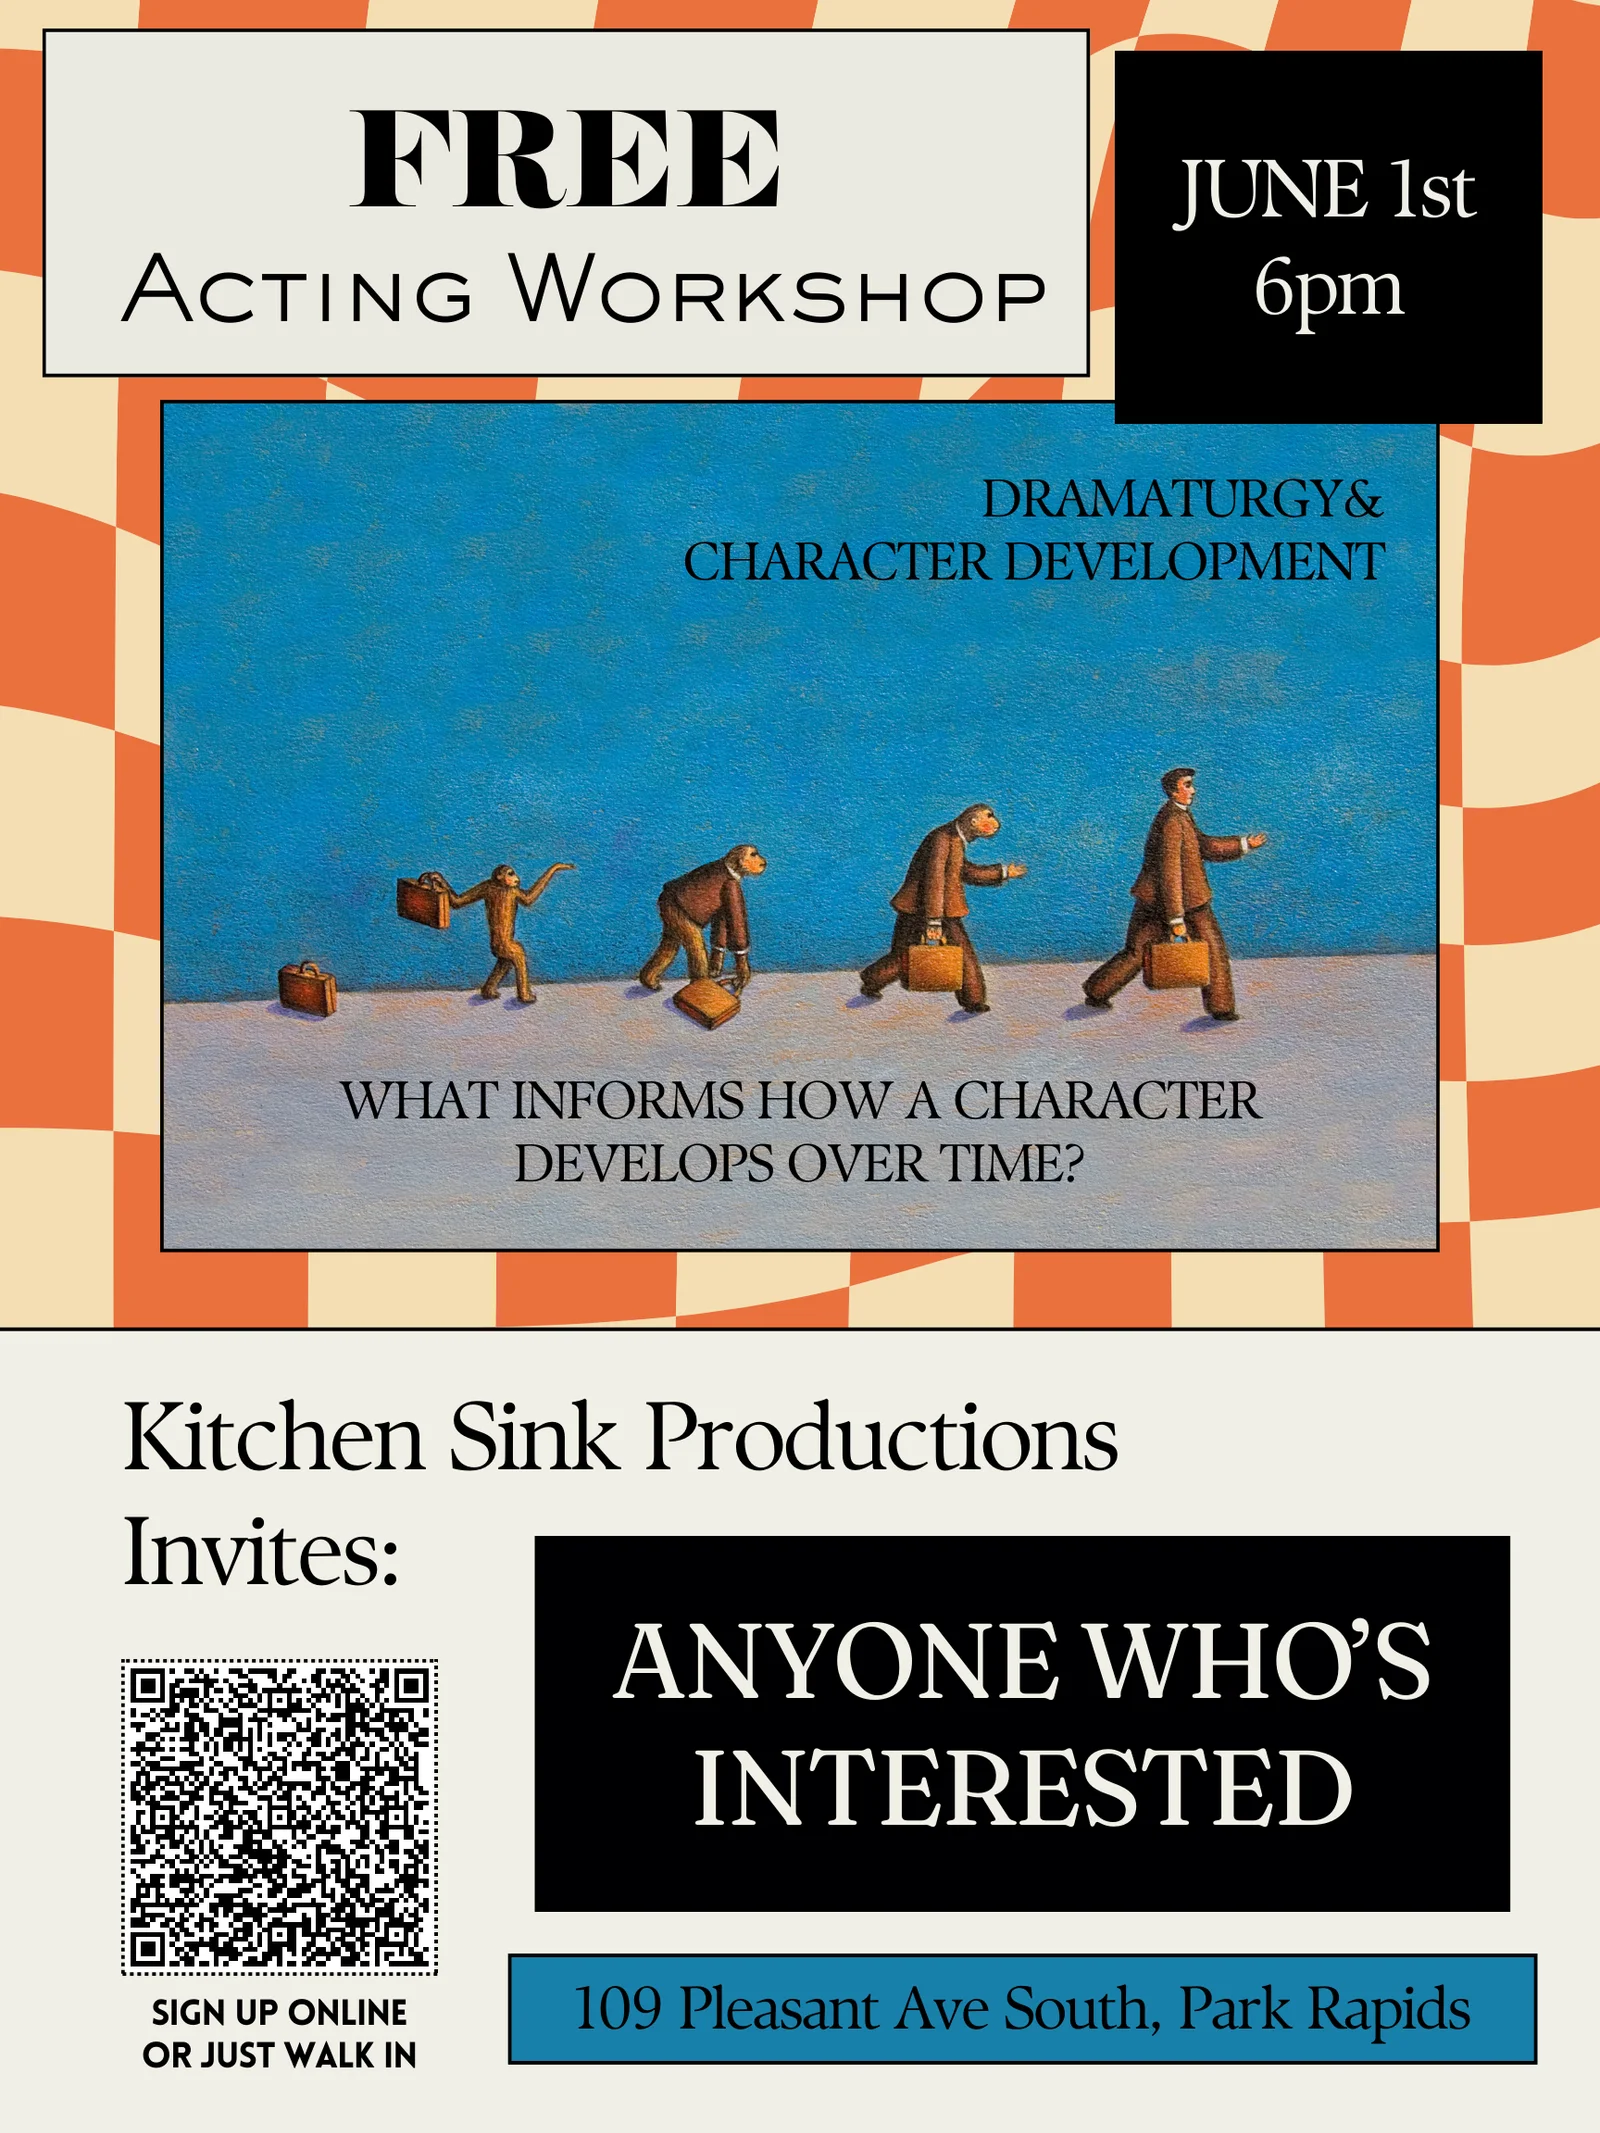 June 1 6pm Free Dramaturgy/ Character Development Kitchen Sink Productions 109 Pleasant Ave S Park Rapids